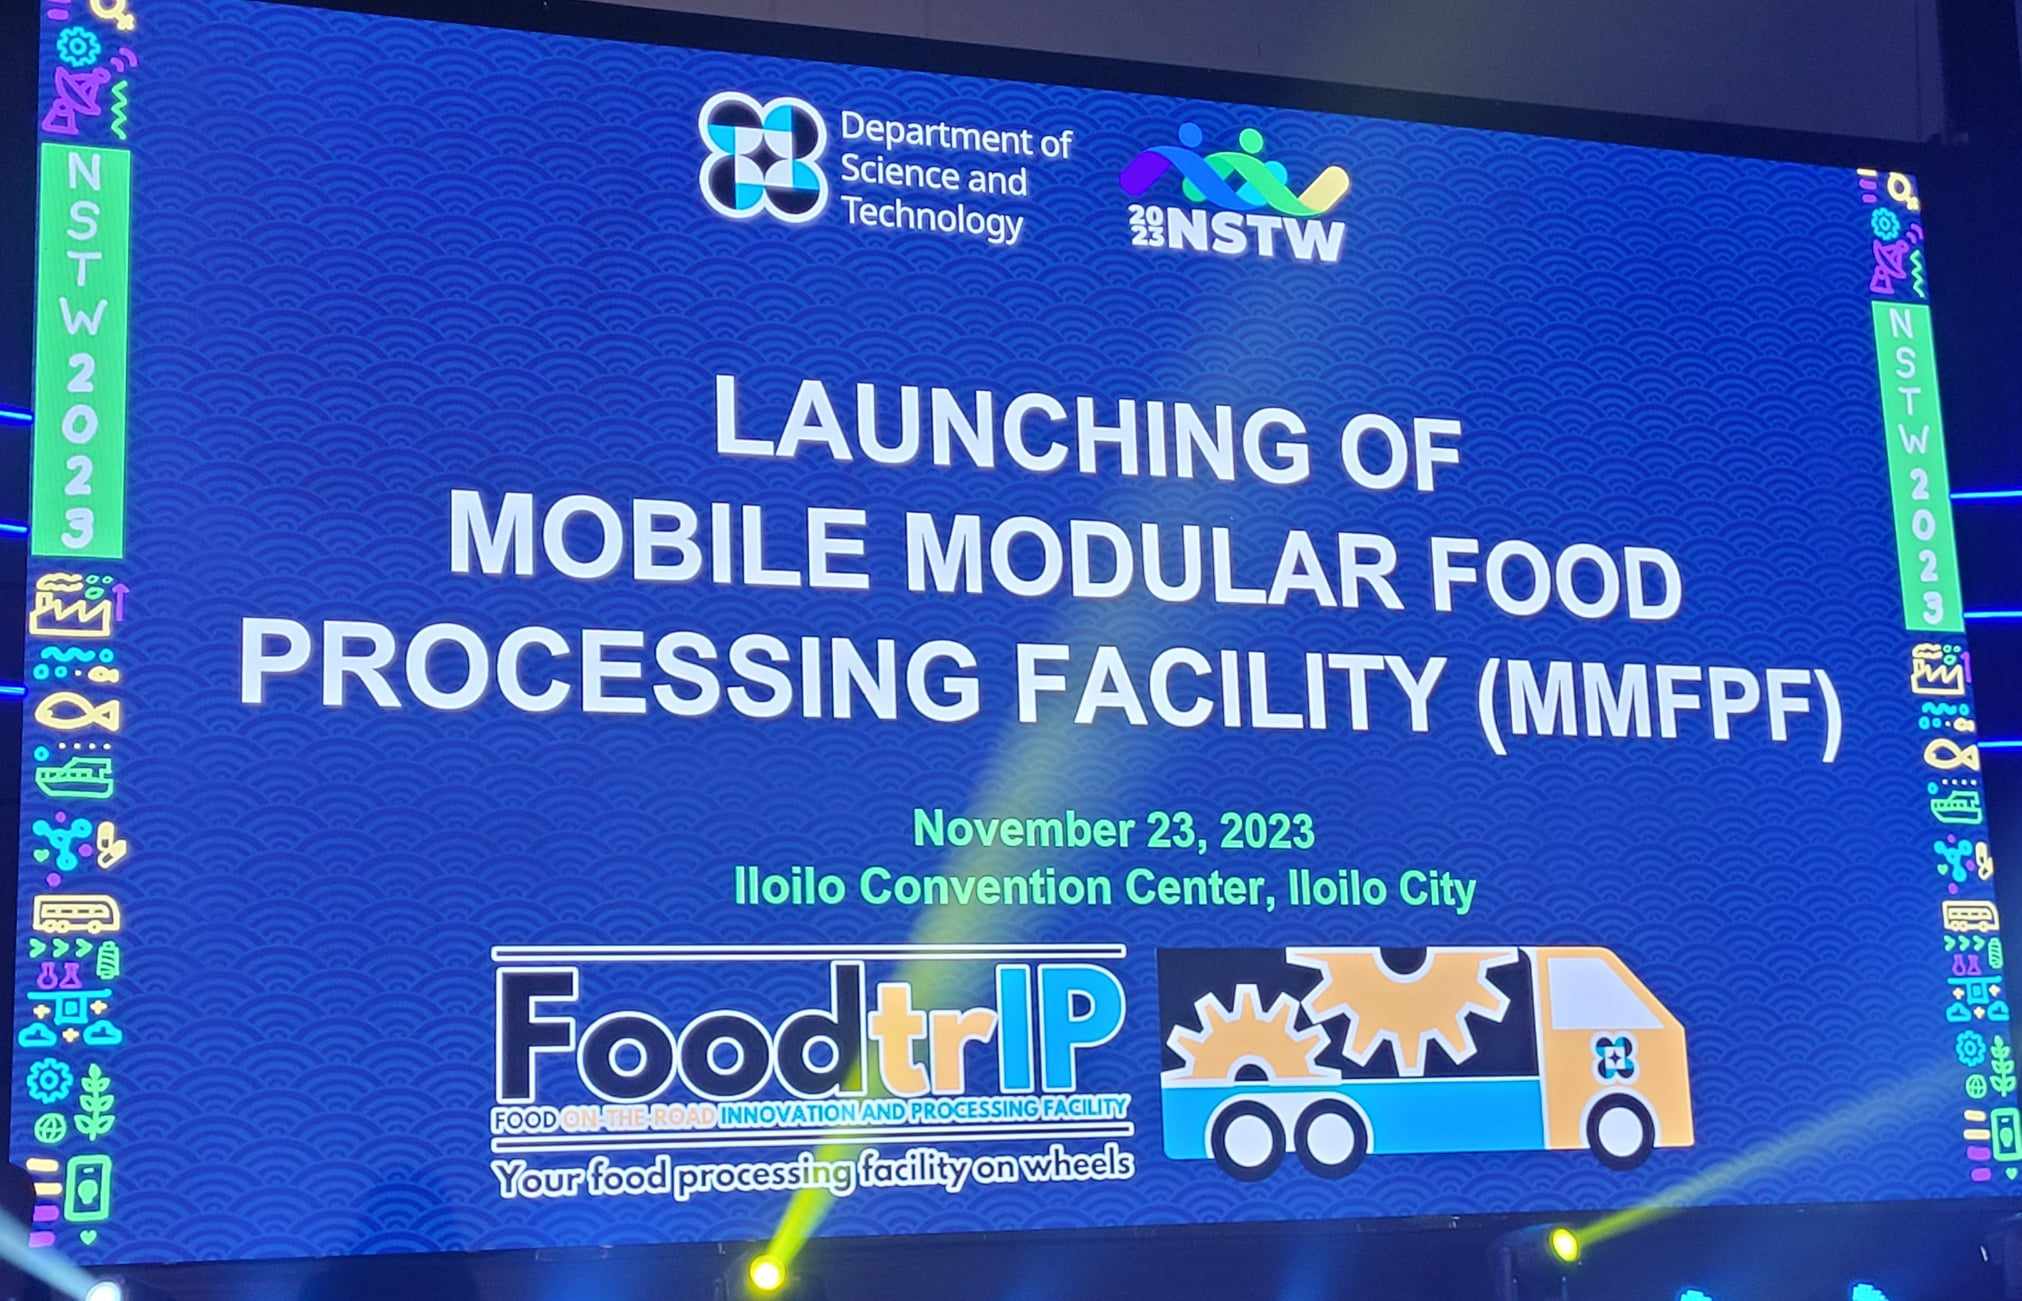 Mobile Modular Food Processor launched in Iloilo City